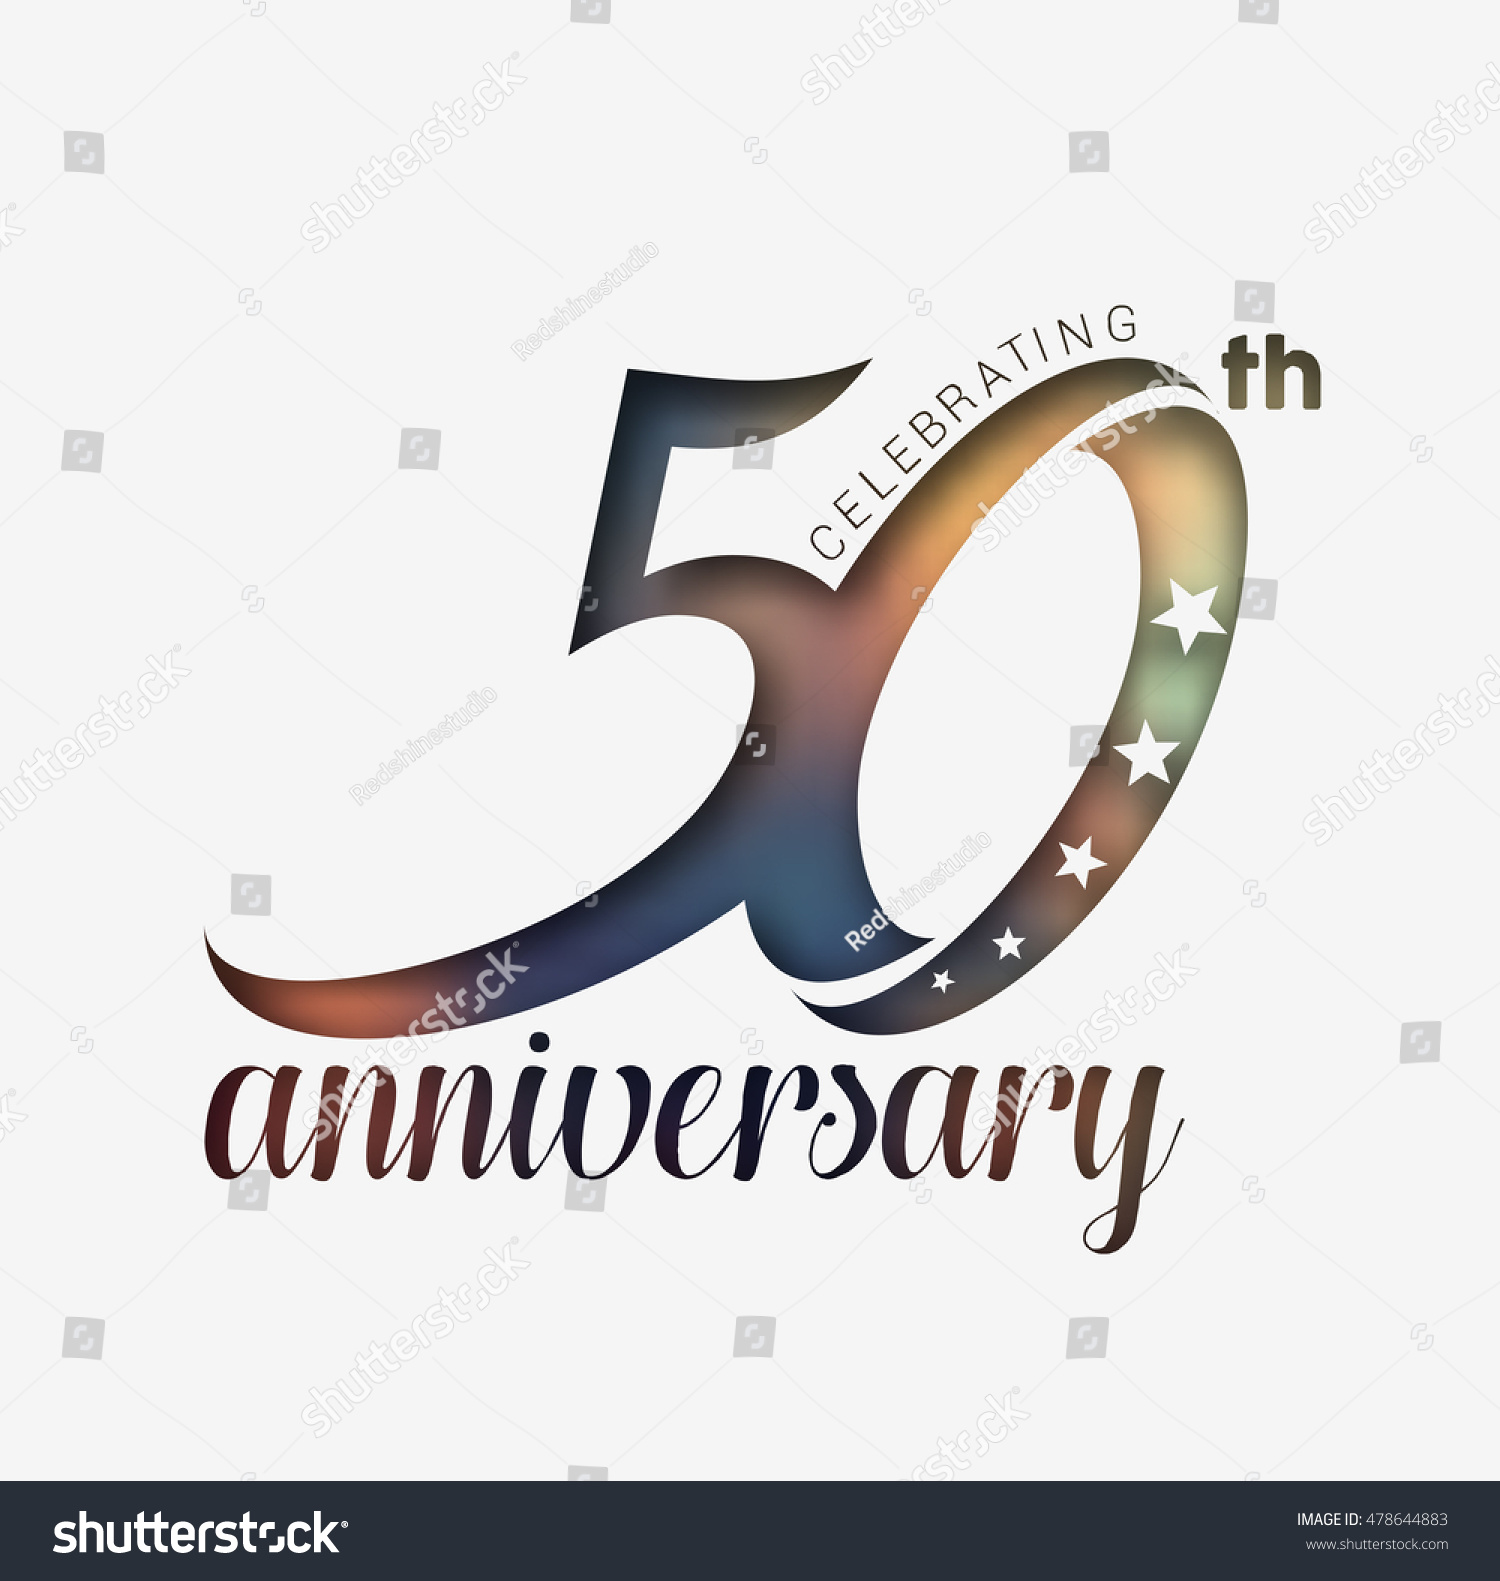 50th Years Anniversary Celebration Design. Stock Vector Illustration ...